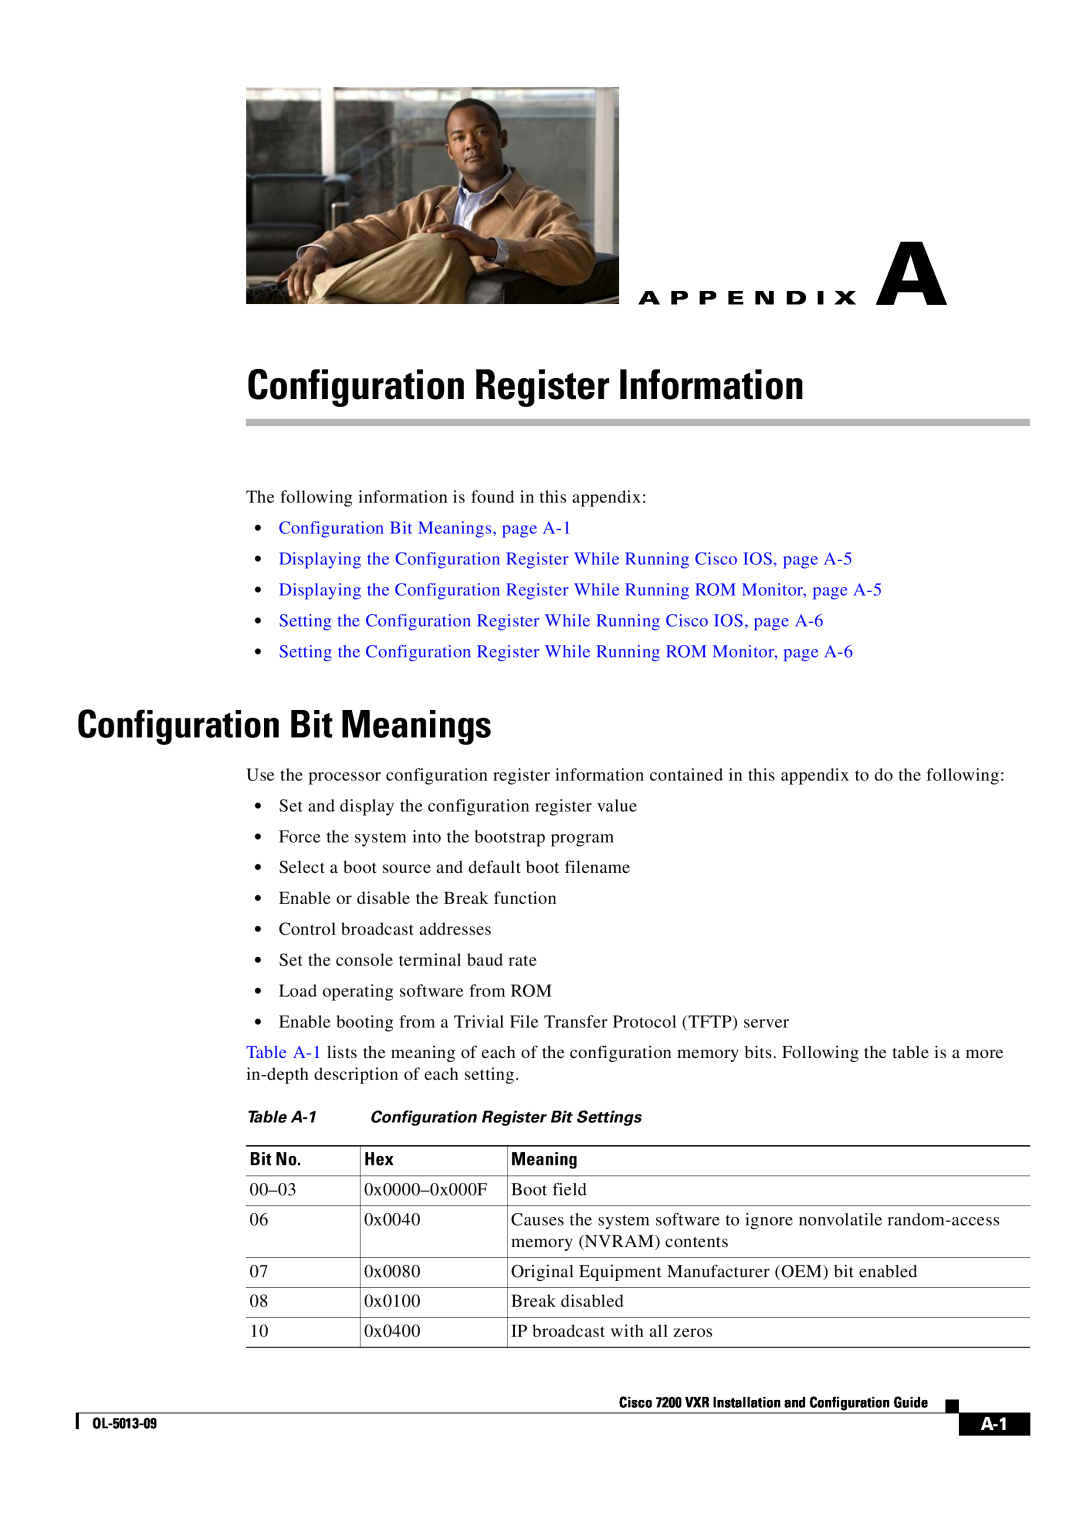 Cisco Systems 7200 VXR manual Configuration Register Information, Configuration Bit Meanings, A P P E N D I X A 